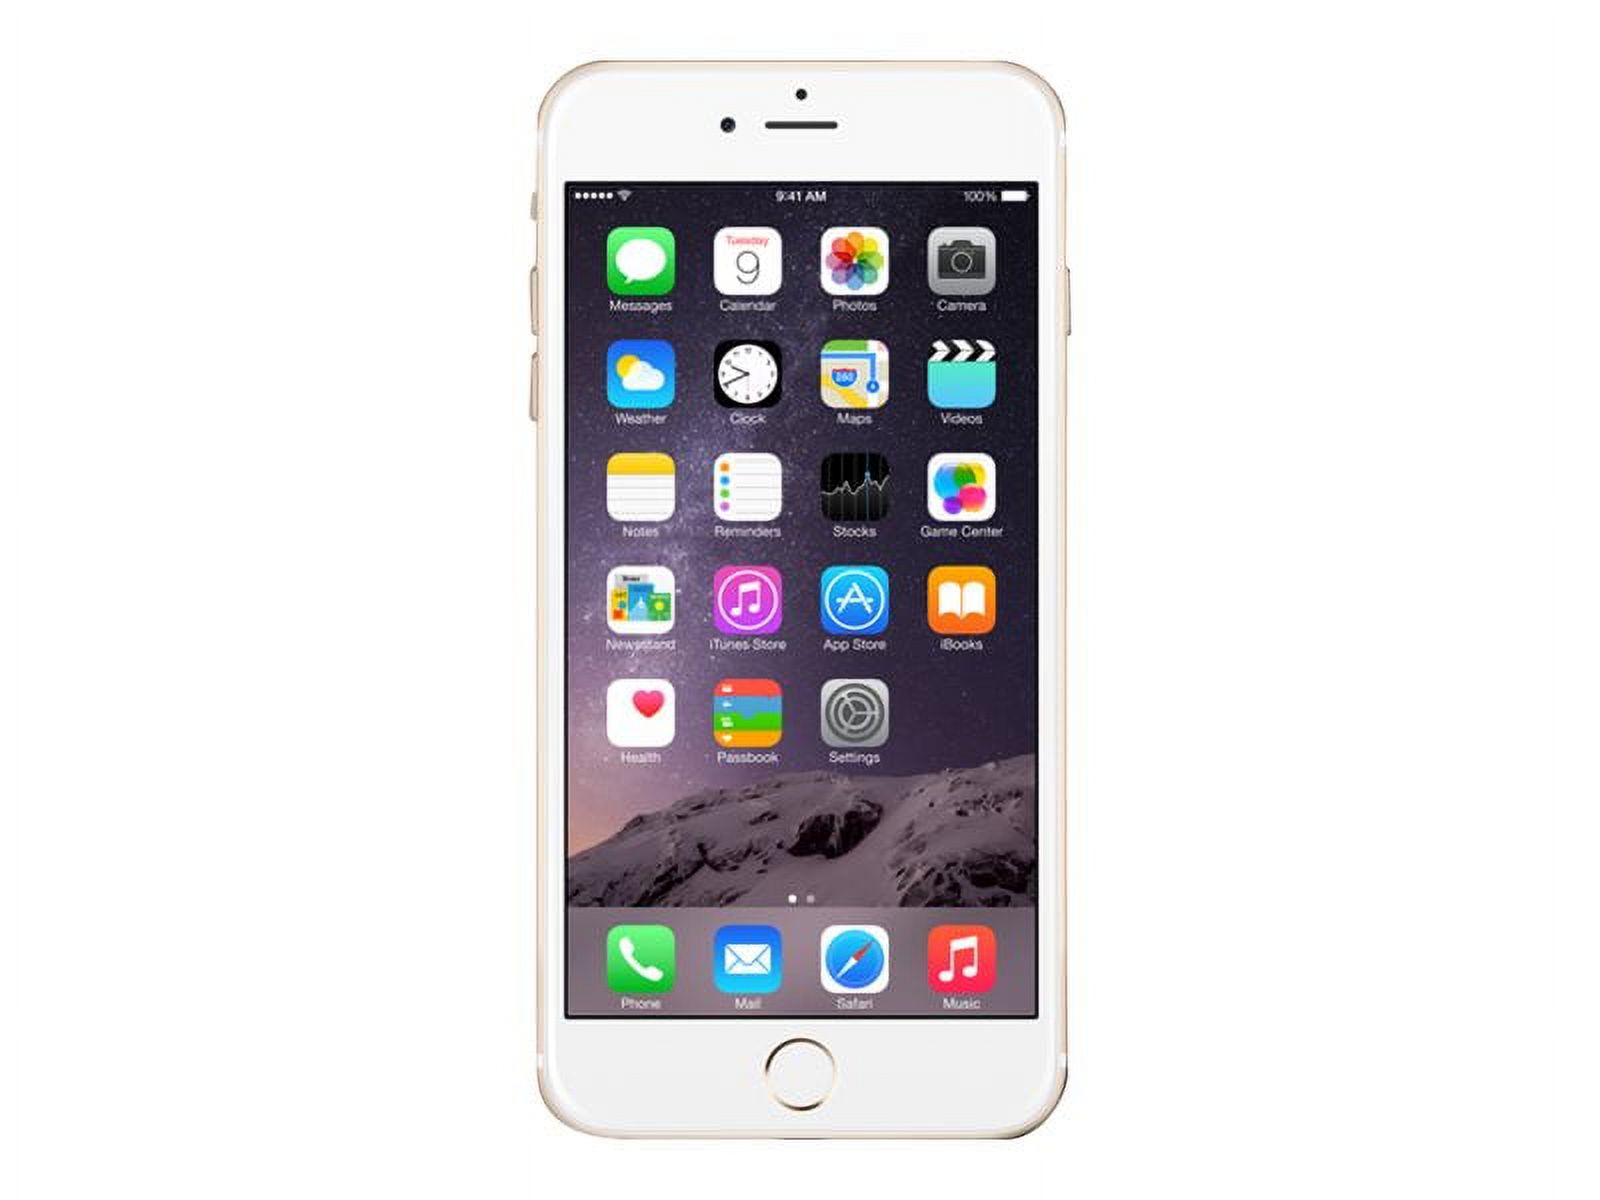 Used Apple iPhone 6 Plus 16GB, Gold - Unlocked GSM - image 1 of 3